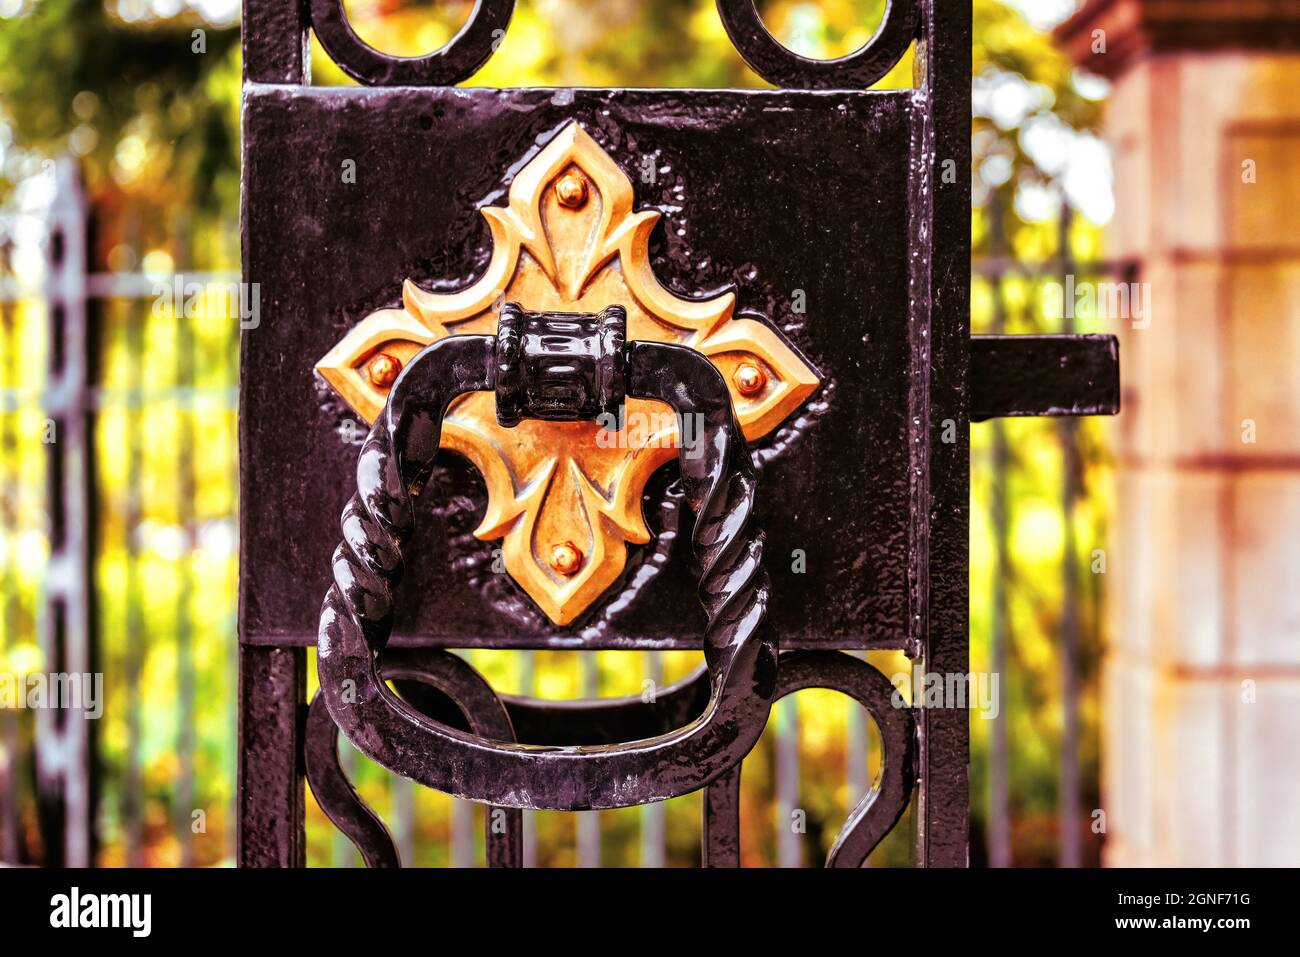 Detail of a metallic door knocker in a gate Stock Photo